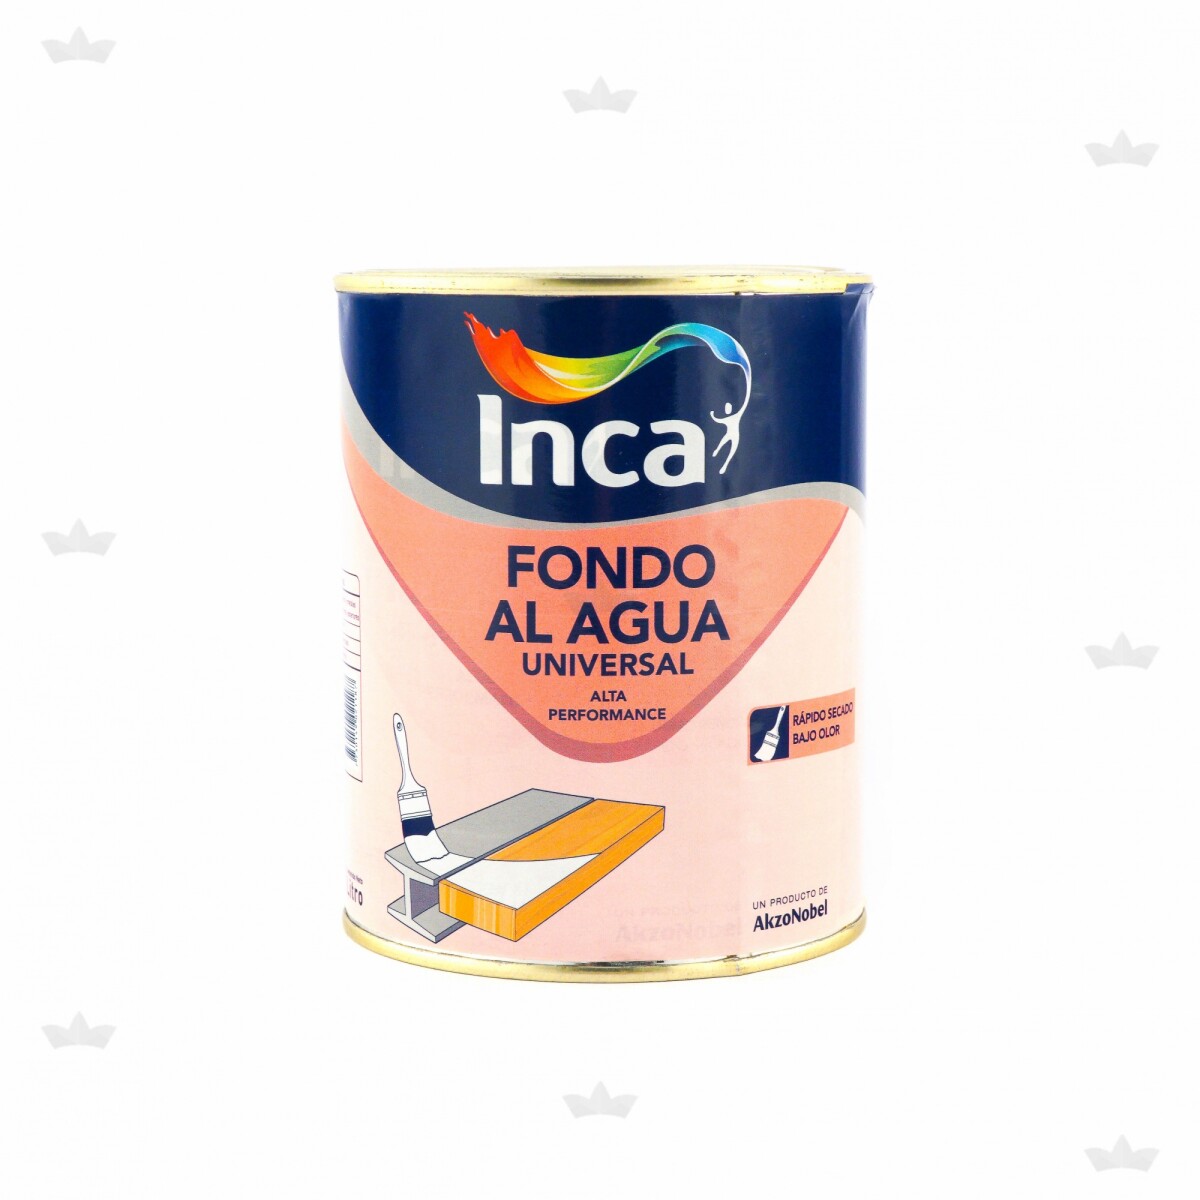 FONDO UNIVERSAL AL AGUA INCA - 1 LT. 